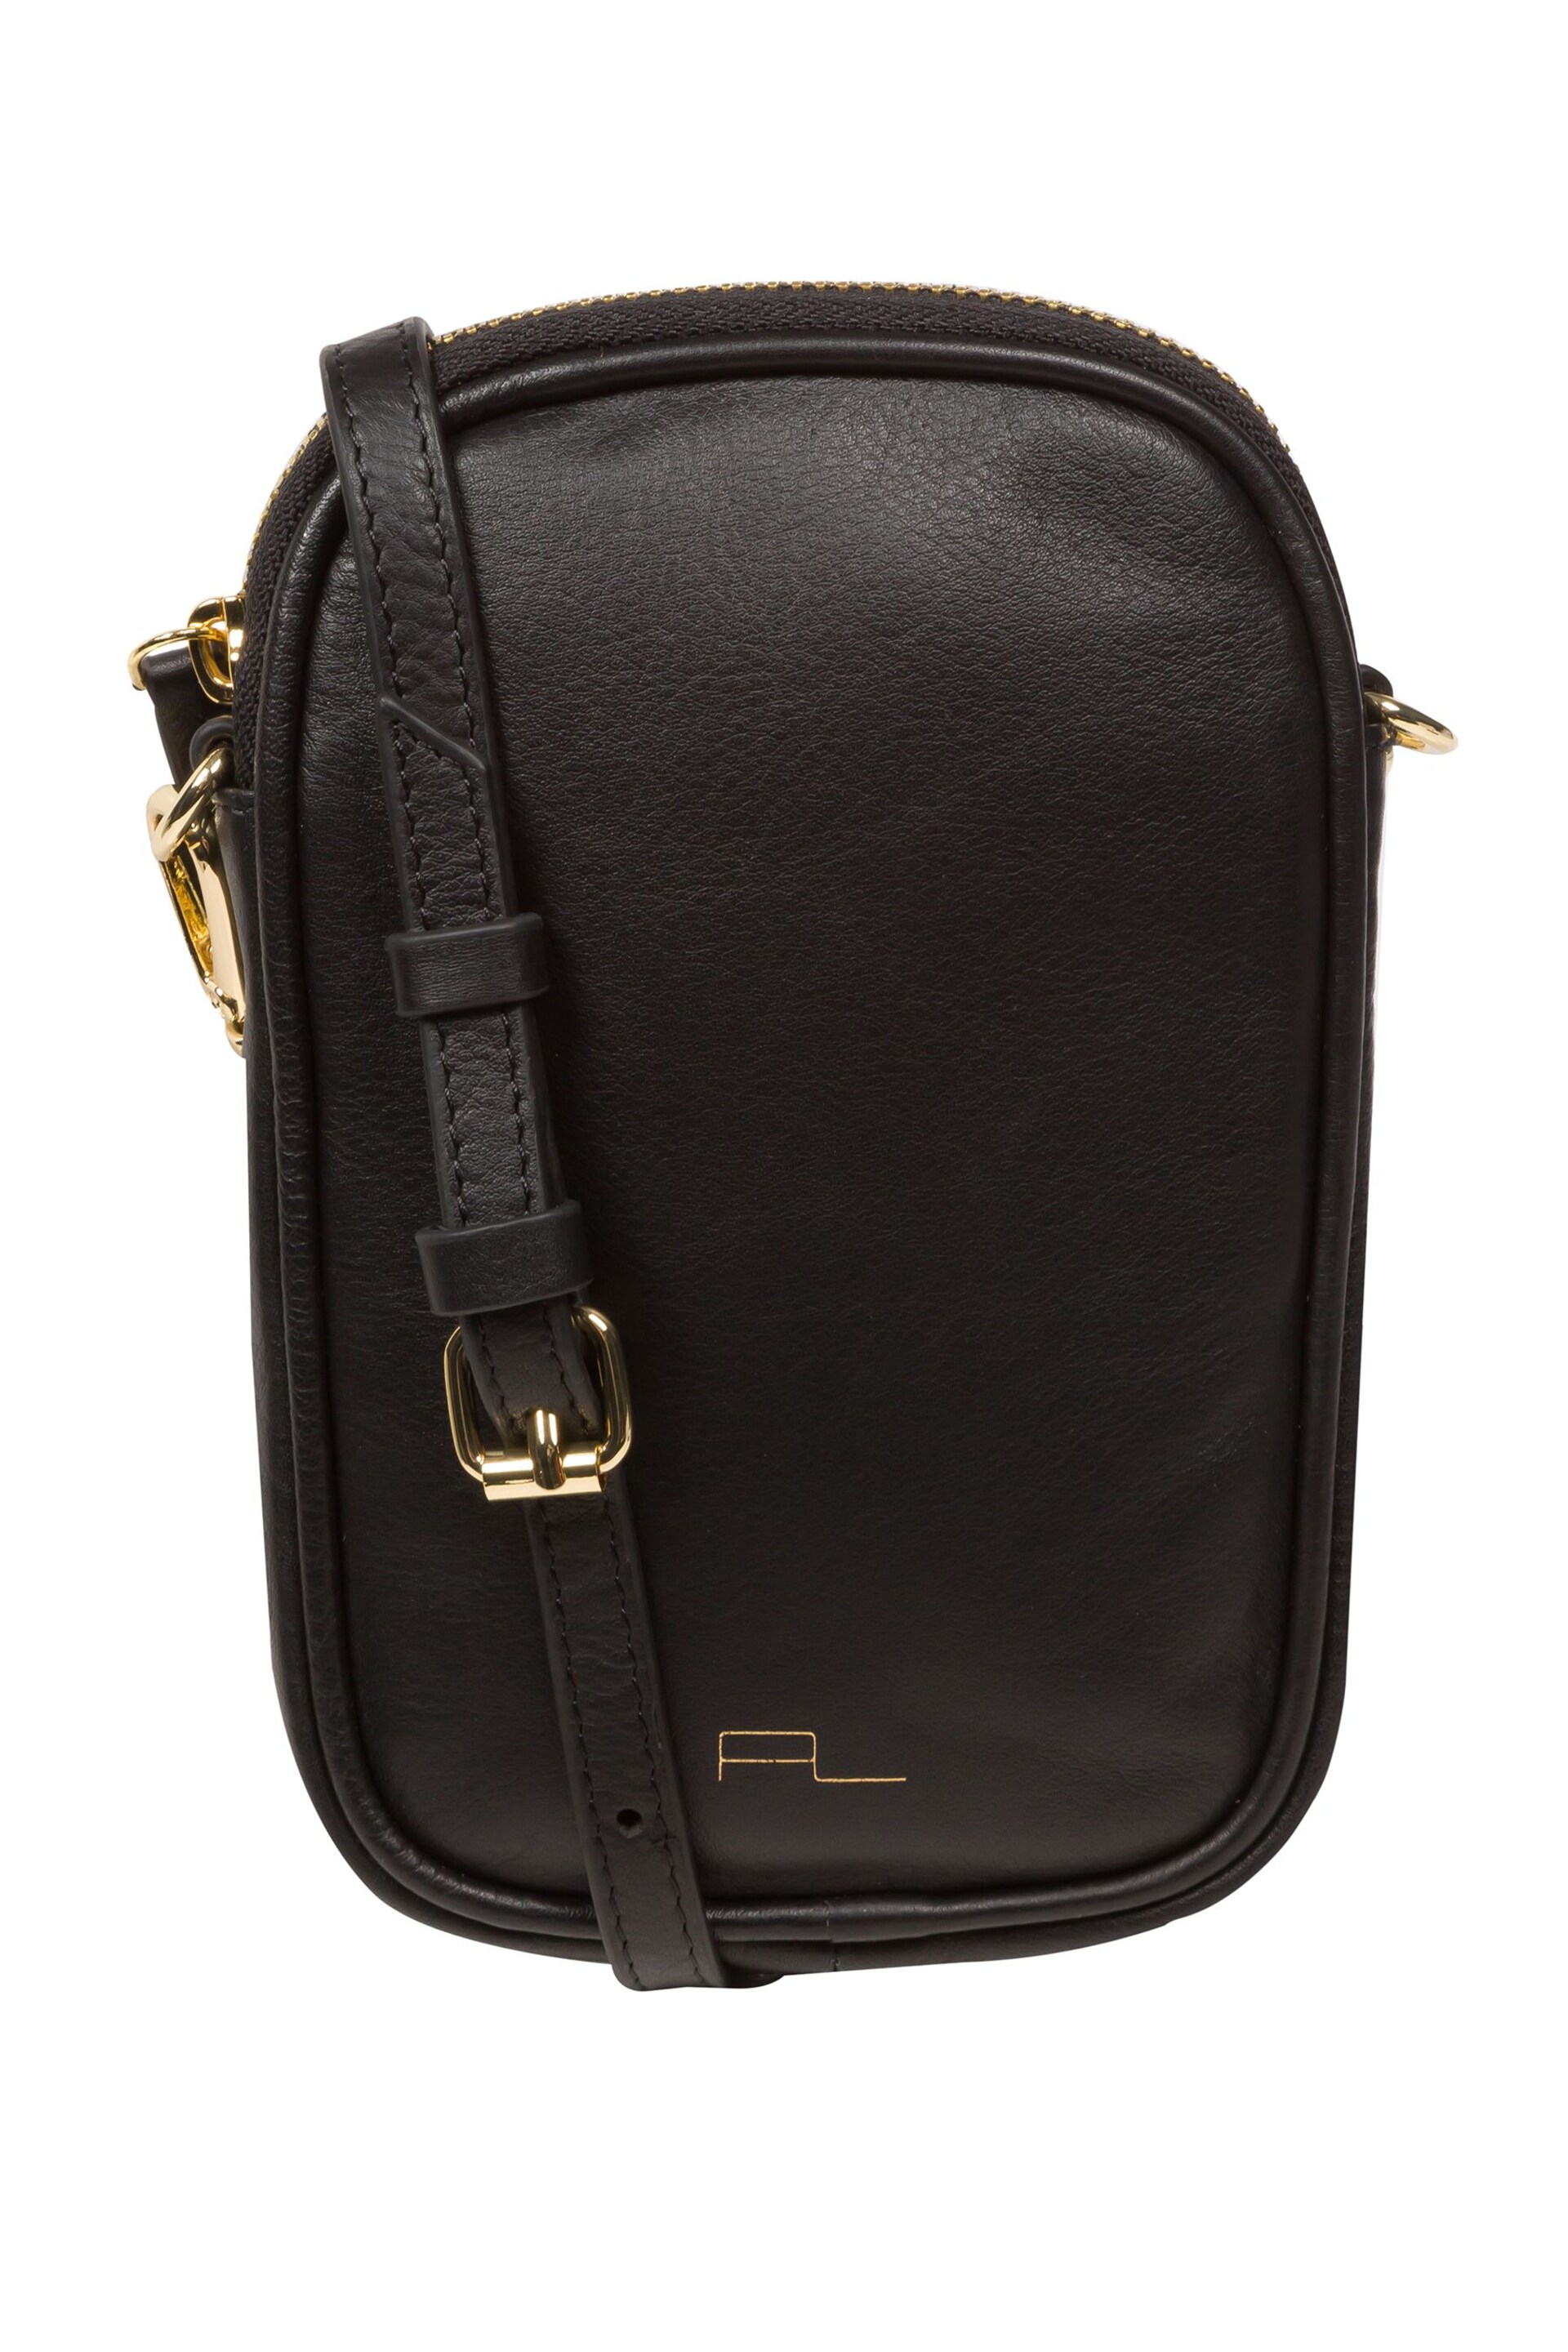 Pure Luxuries London Alaina Nappa Leather Cross-Body Phone Bag - Image 1 of 7